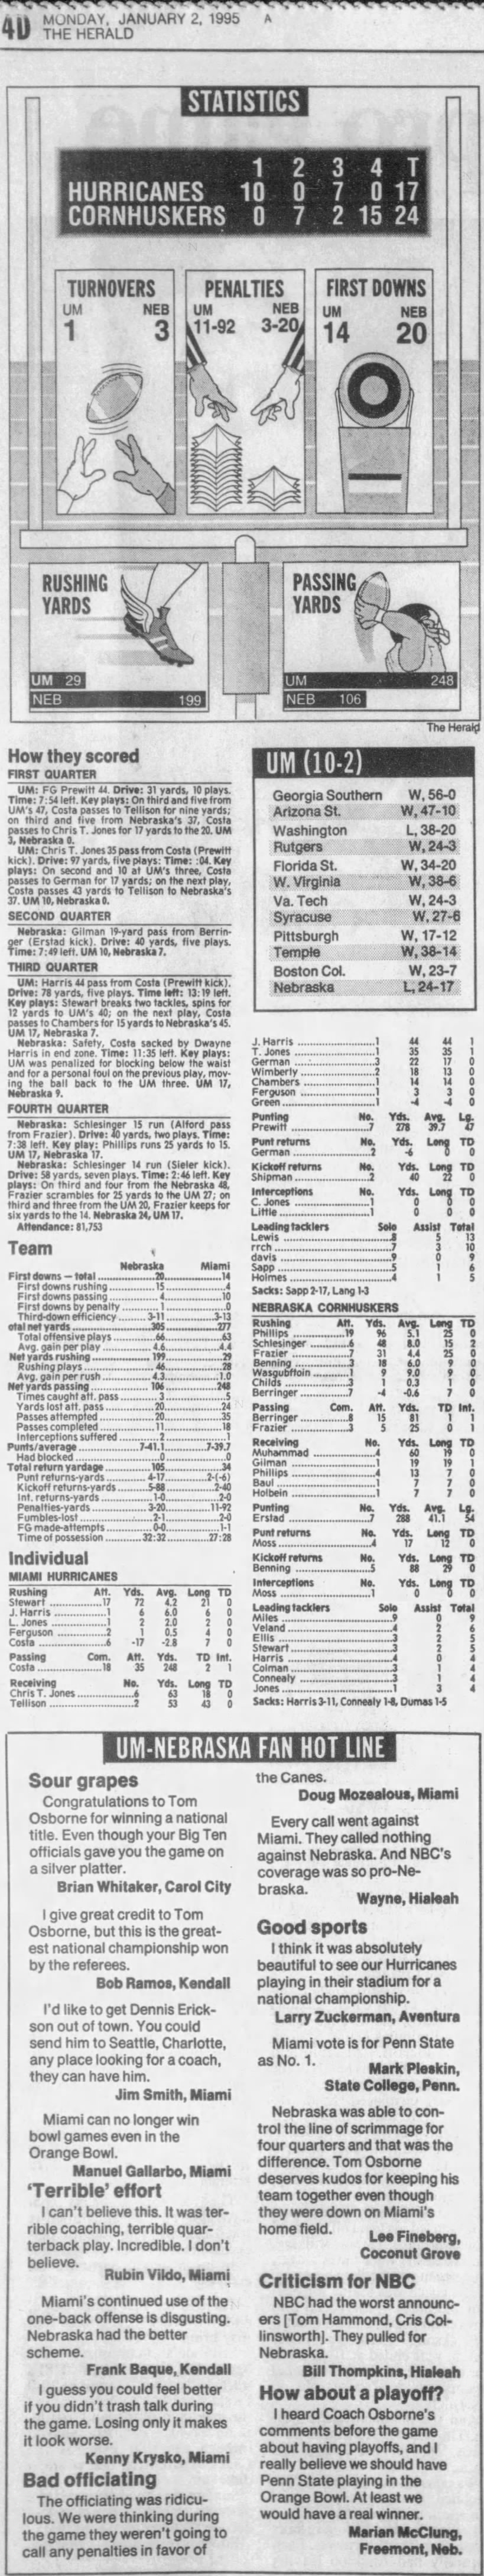 1995 Orange Bowl, Miami stats etc